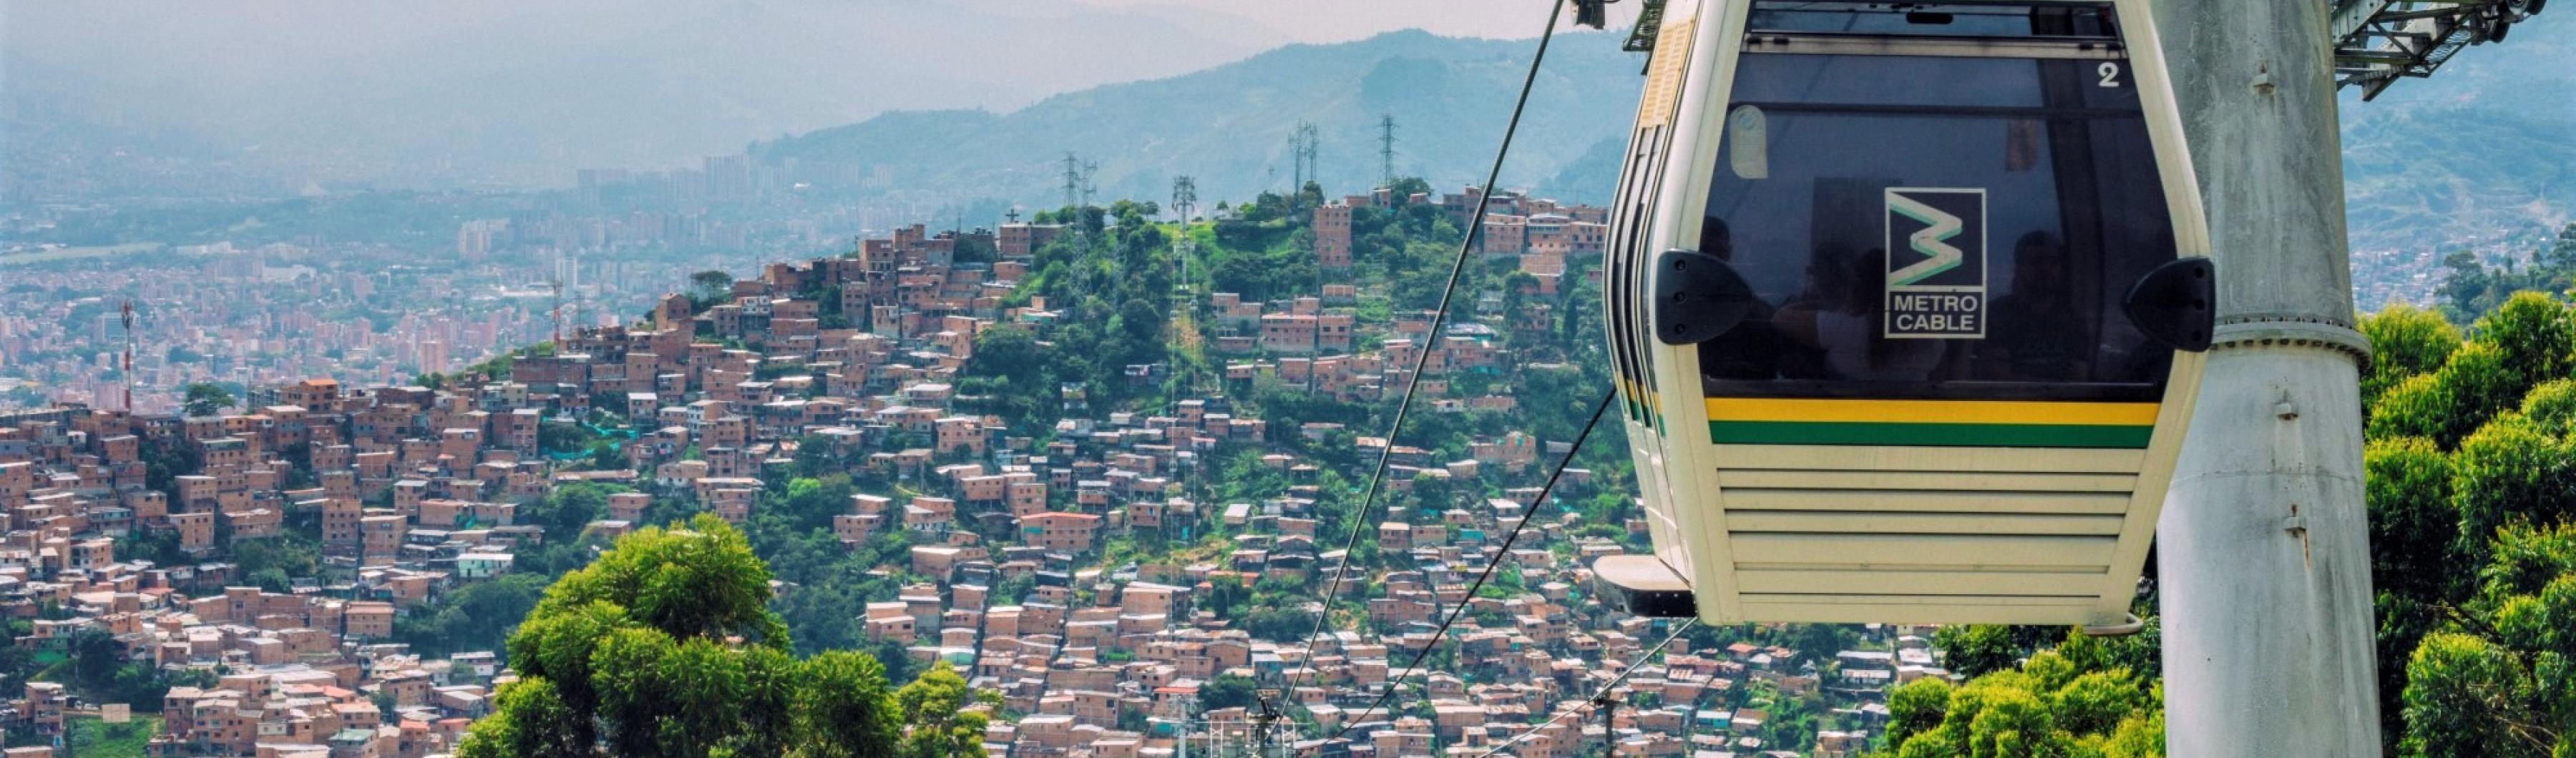 Teleféricos em Medellín, Colômbia